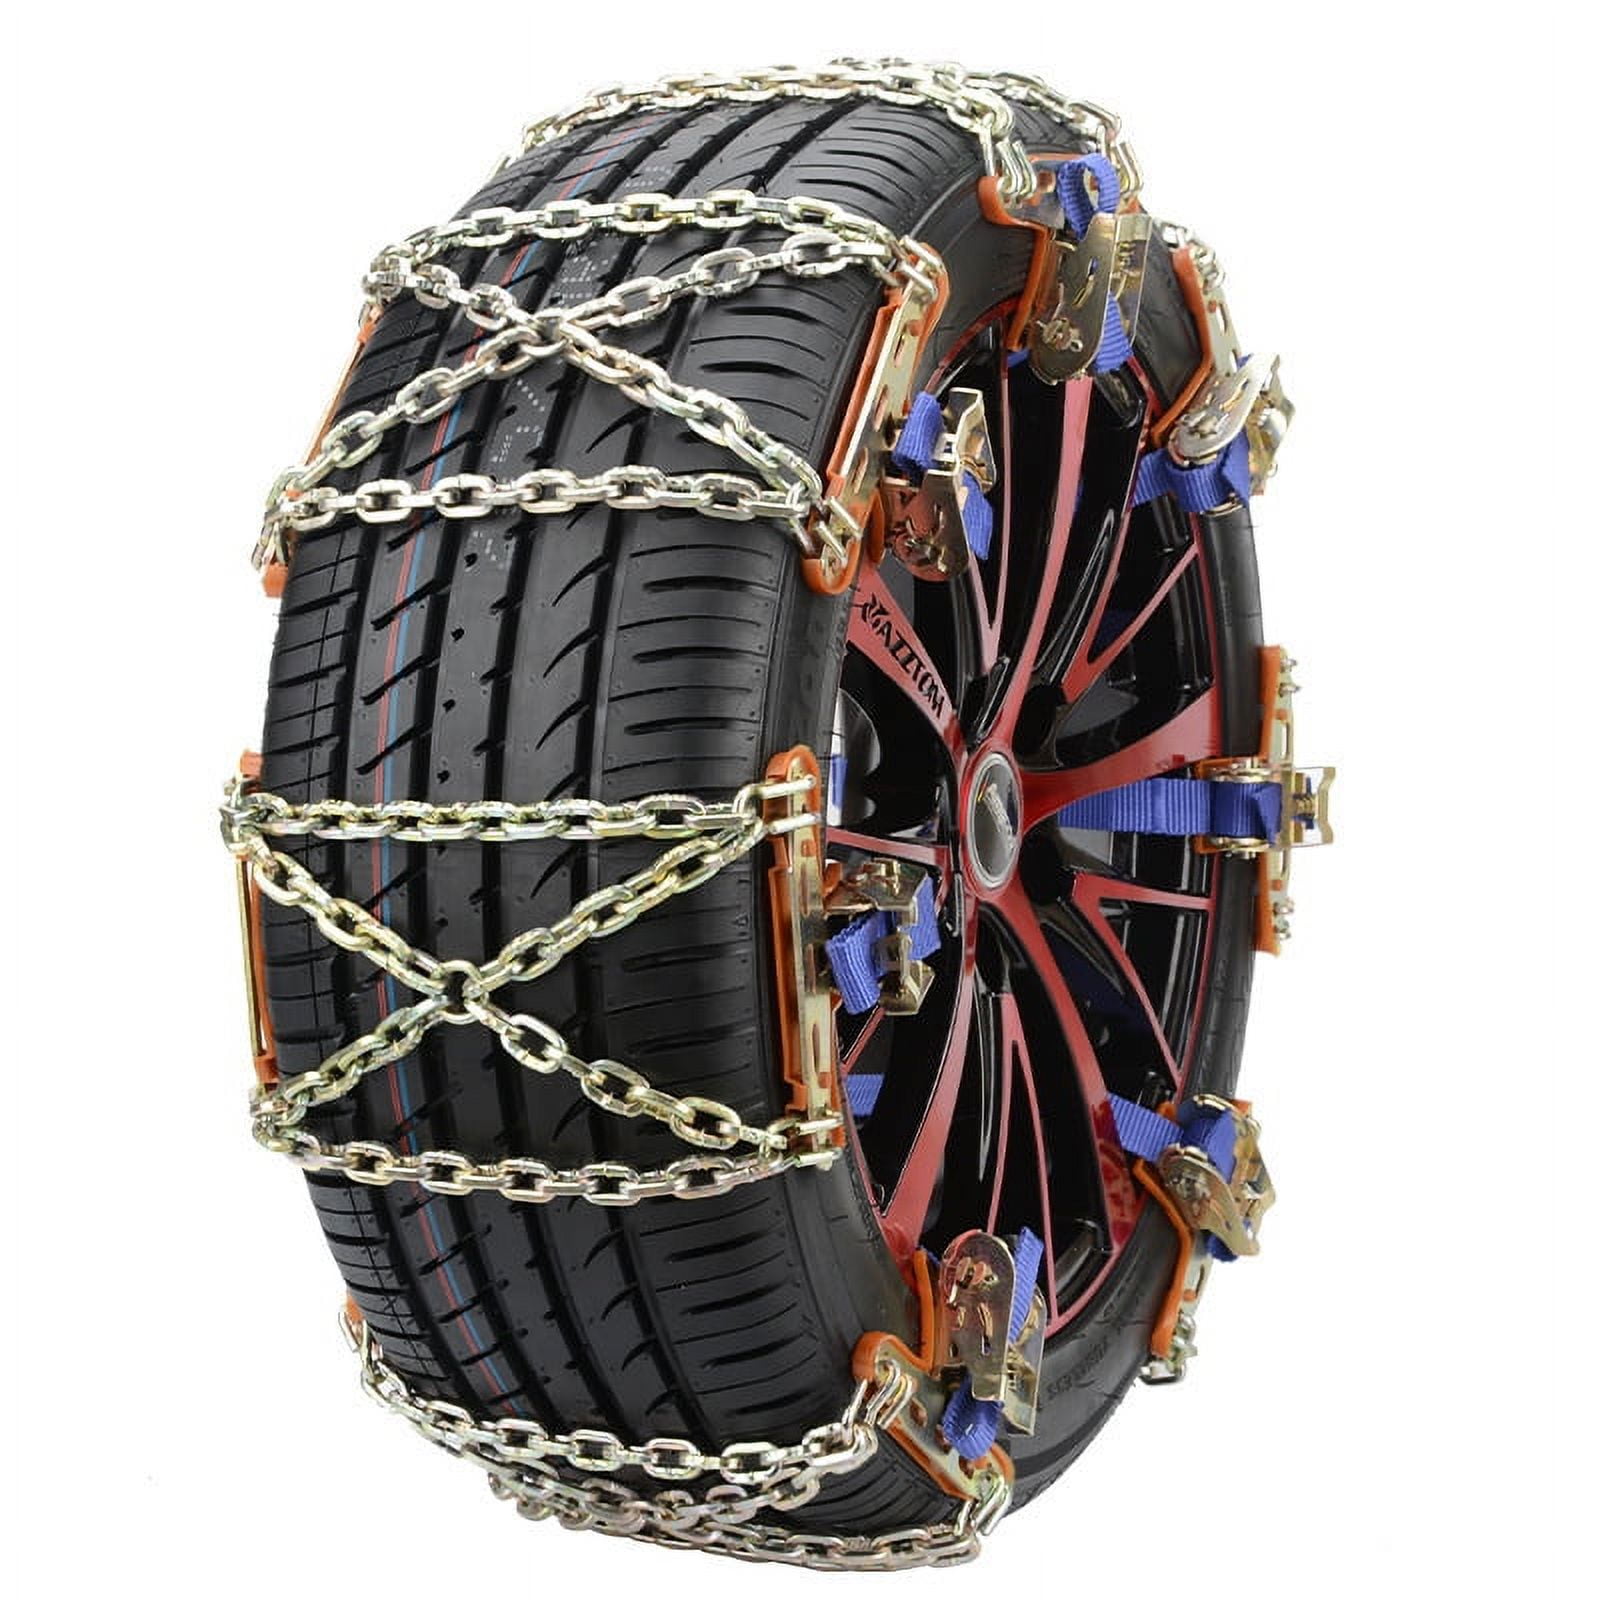  Tire Chains 8Pcs Snow Chains Emergency Anti Slip Wheel